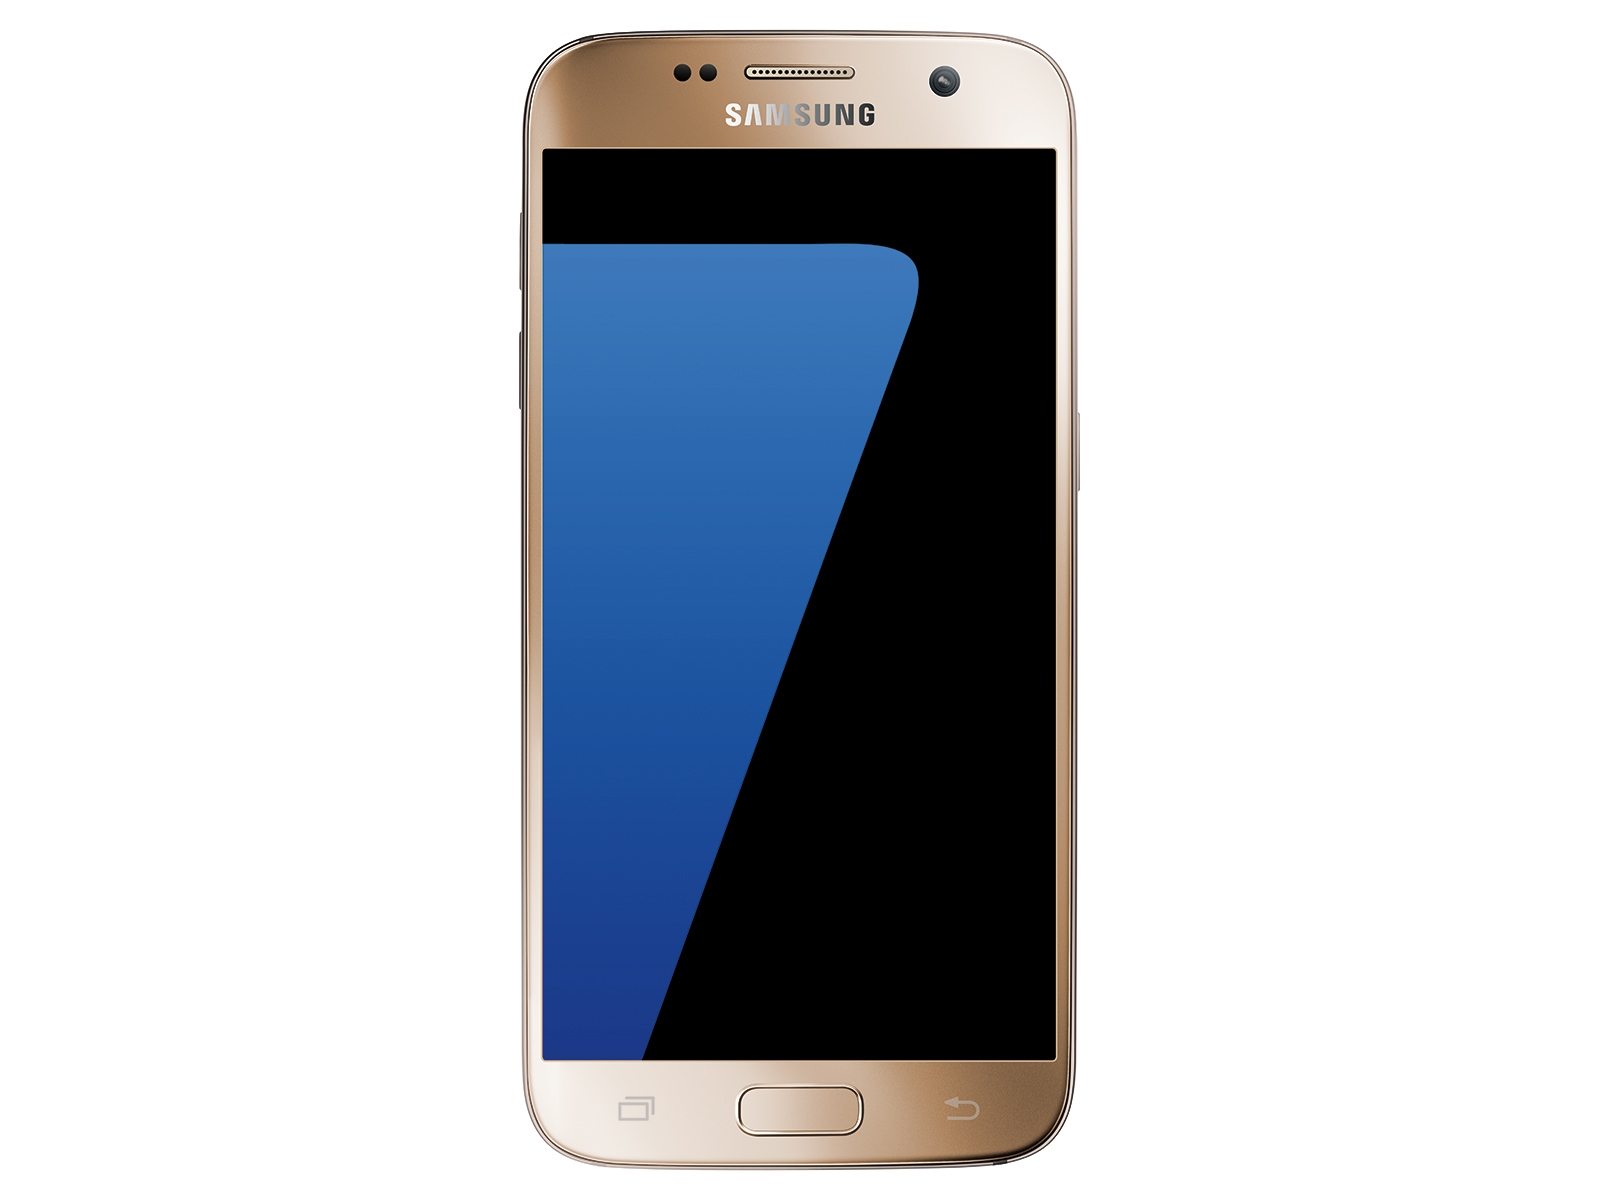 Stad bloem Overtreffen wrijving Galaxy S7 32GB (Unlocked) Phones - SM-G930UZDAXAA | Samsung US